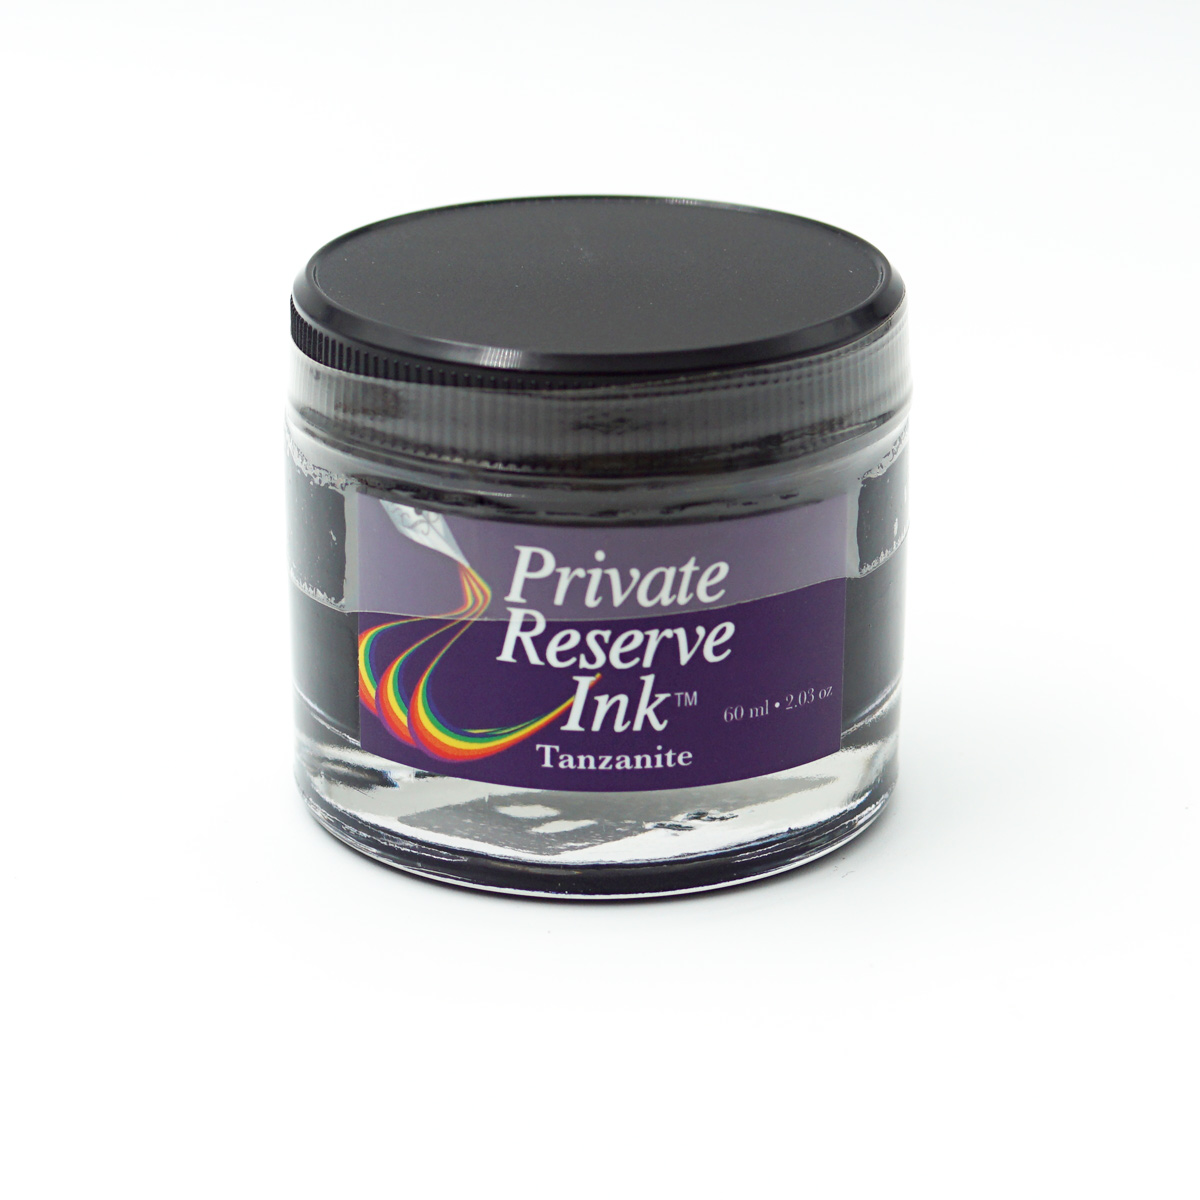 Private Reserve Ink PR17026 60ml Tanzanite Color Ink Bottle SKU70797